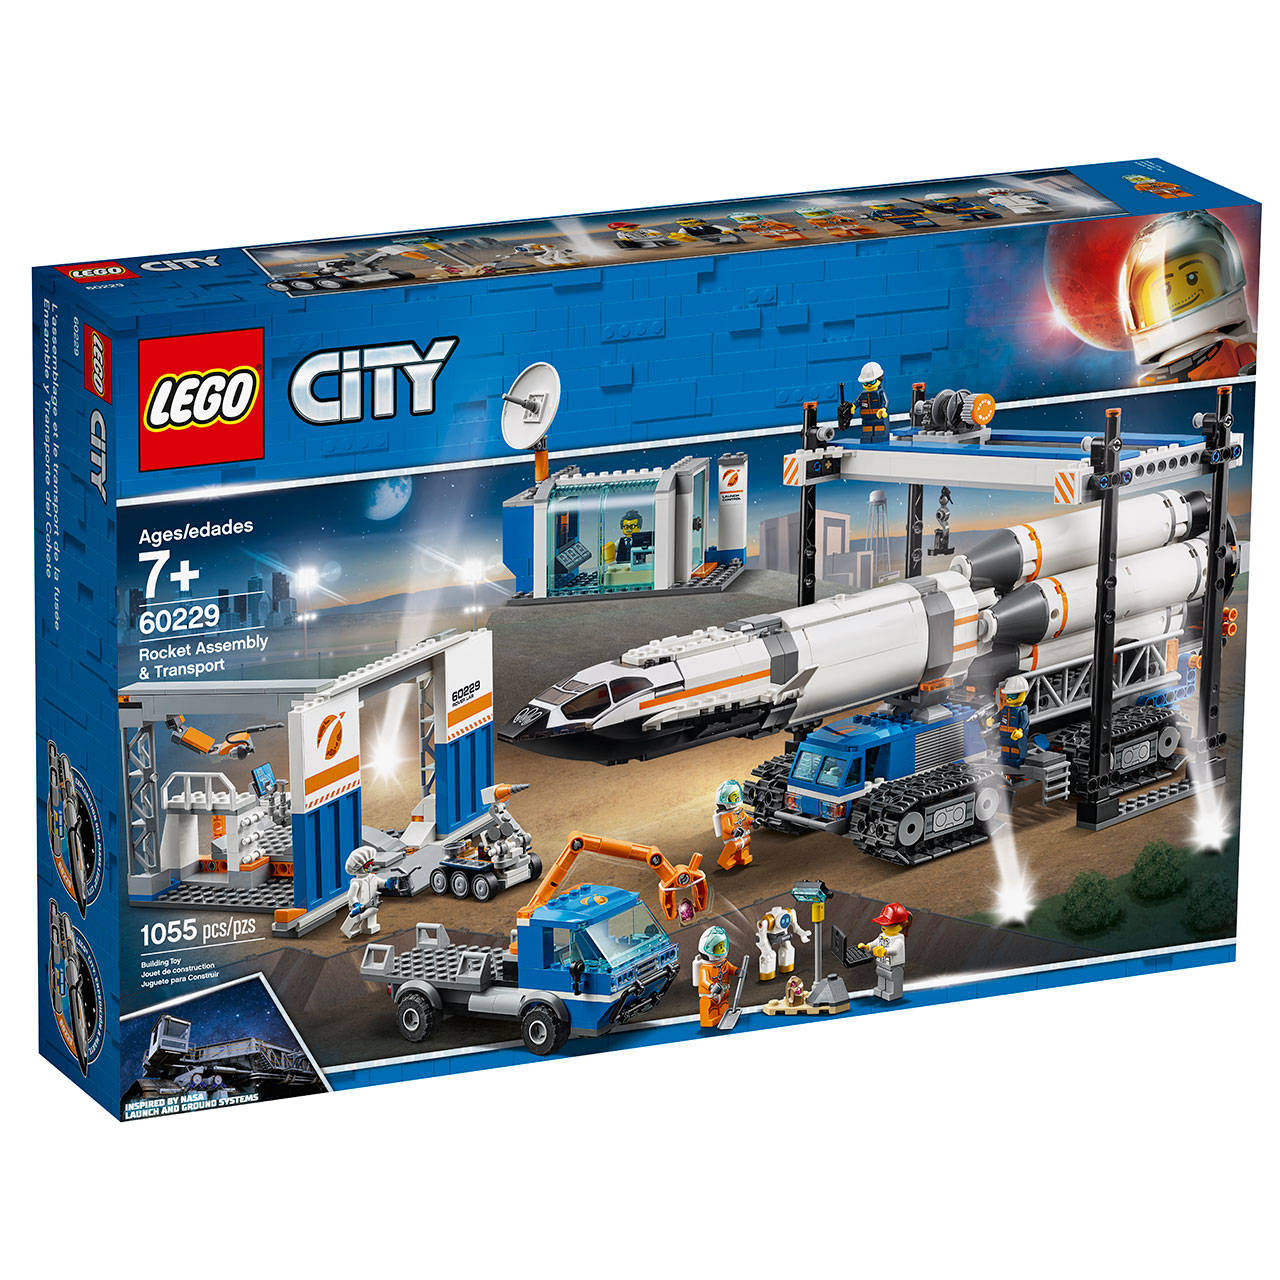 Lego CITY, variante SPACE: ed ora anche la ISS - Tom's Hardware